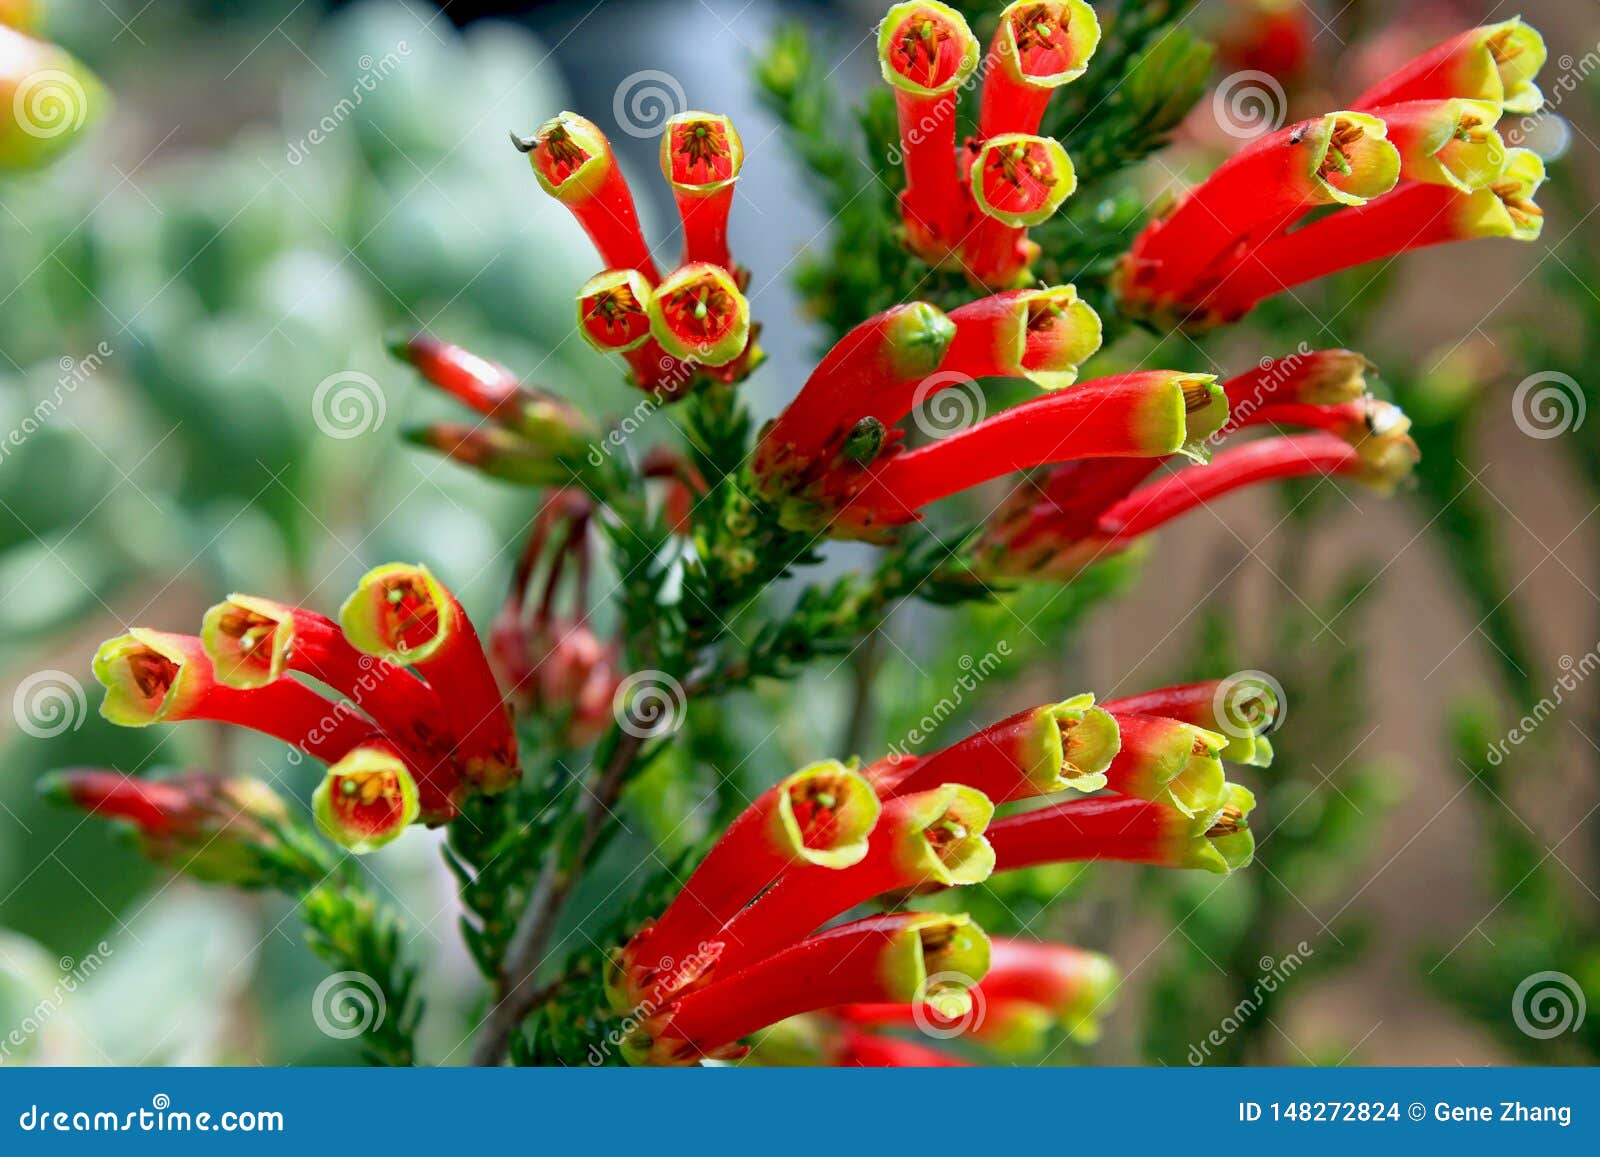 flowers of erica densifolia, garden flower, south africa